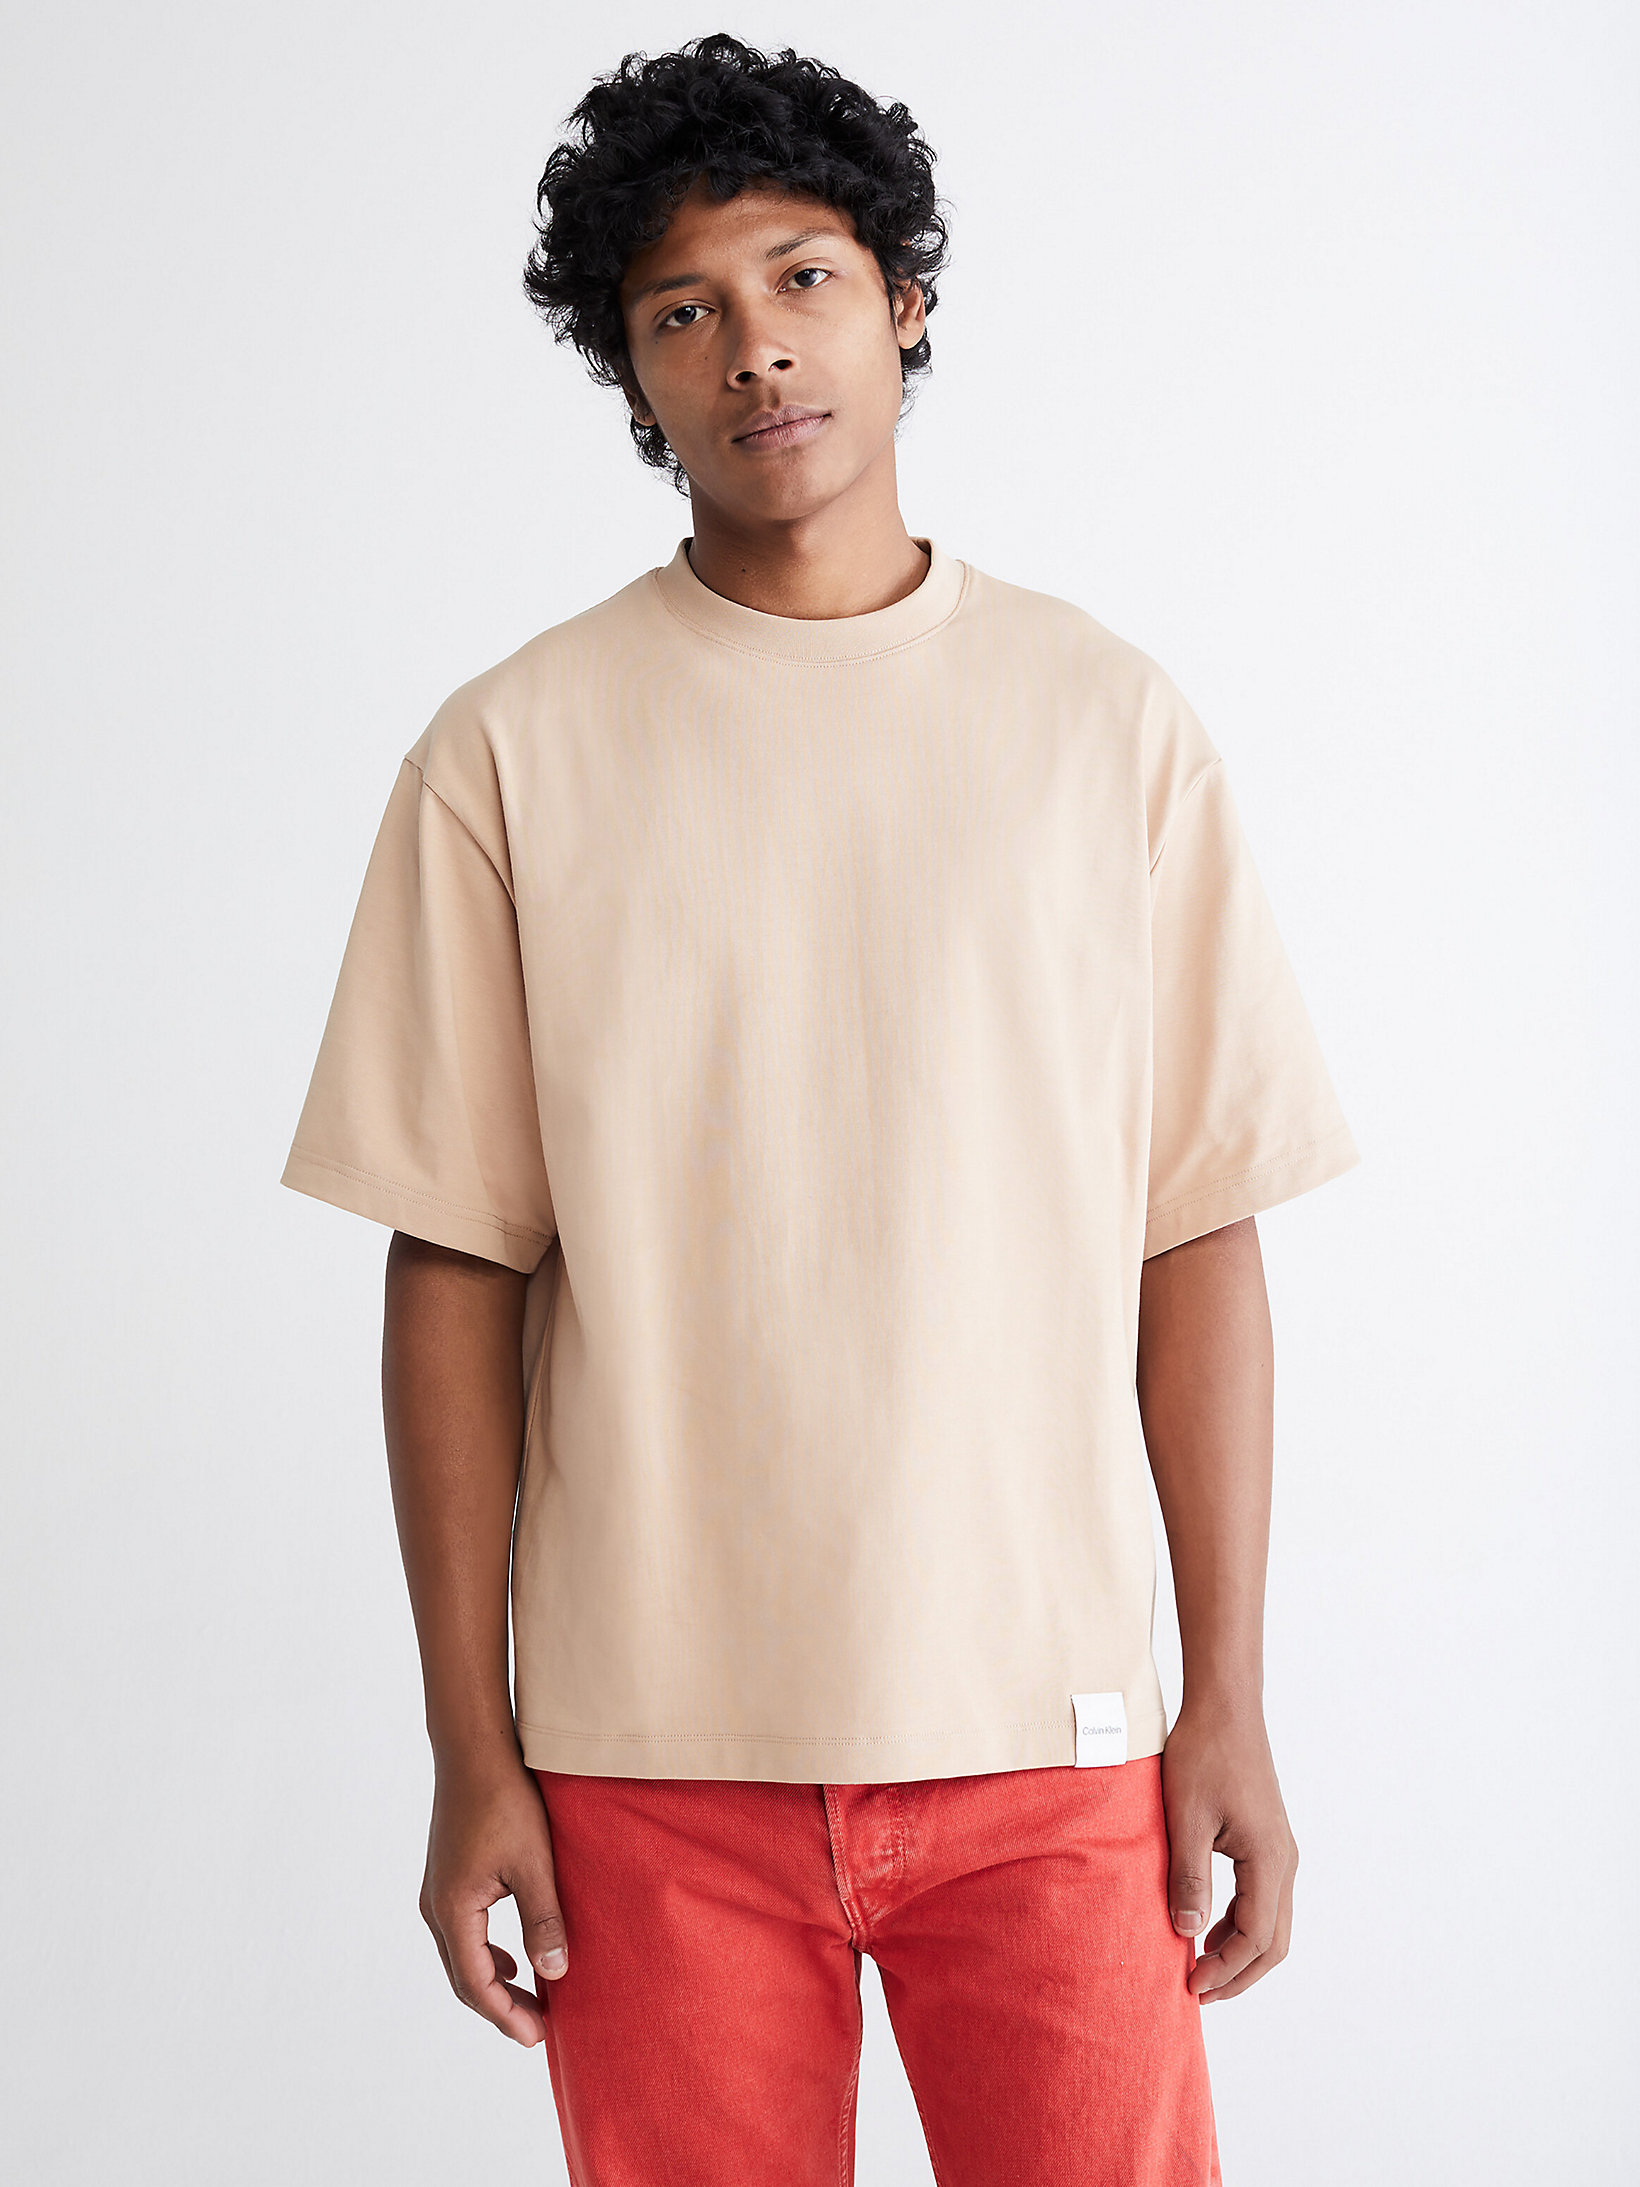 Sandrift Unisex Relaxed T-Shirt - CK Standards undefined men Calvin Klein